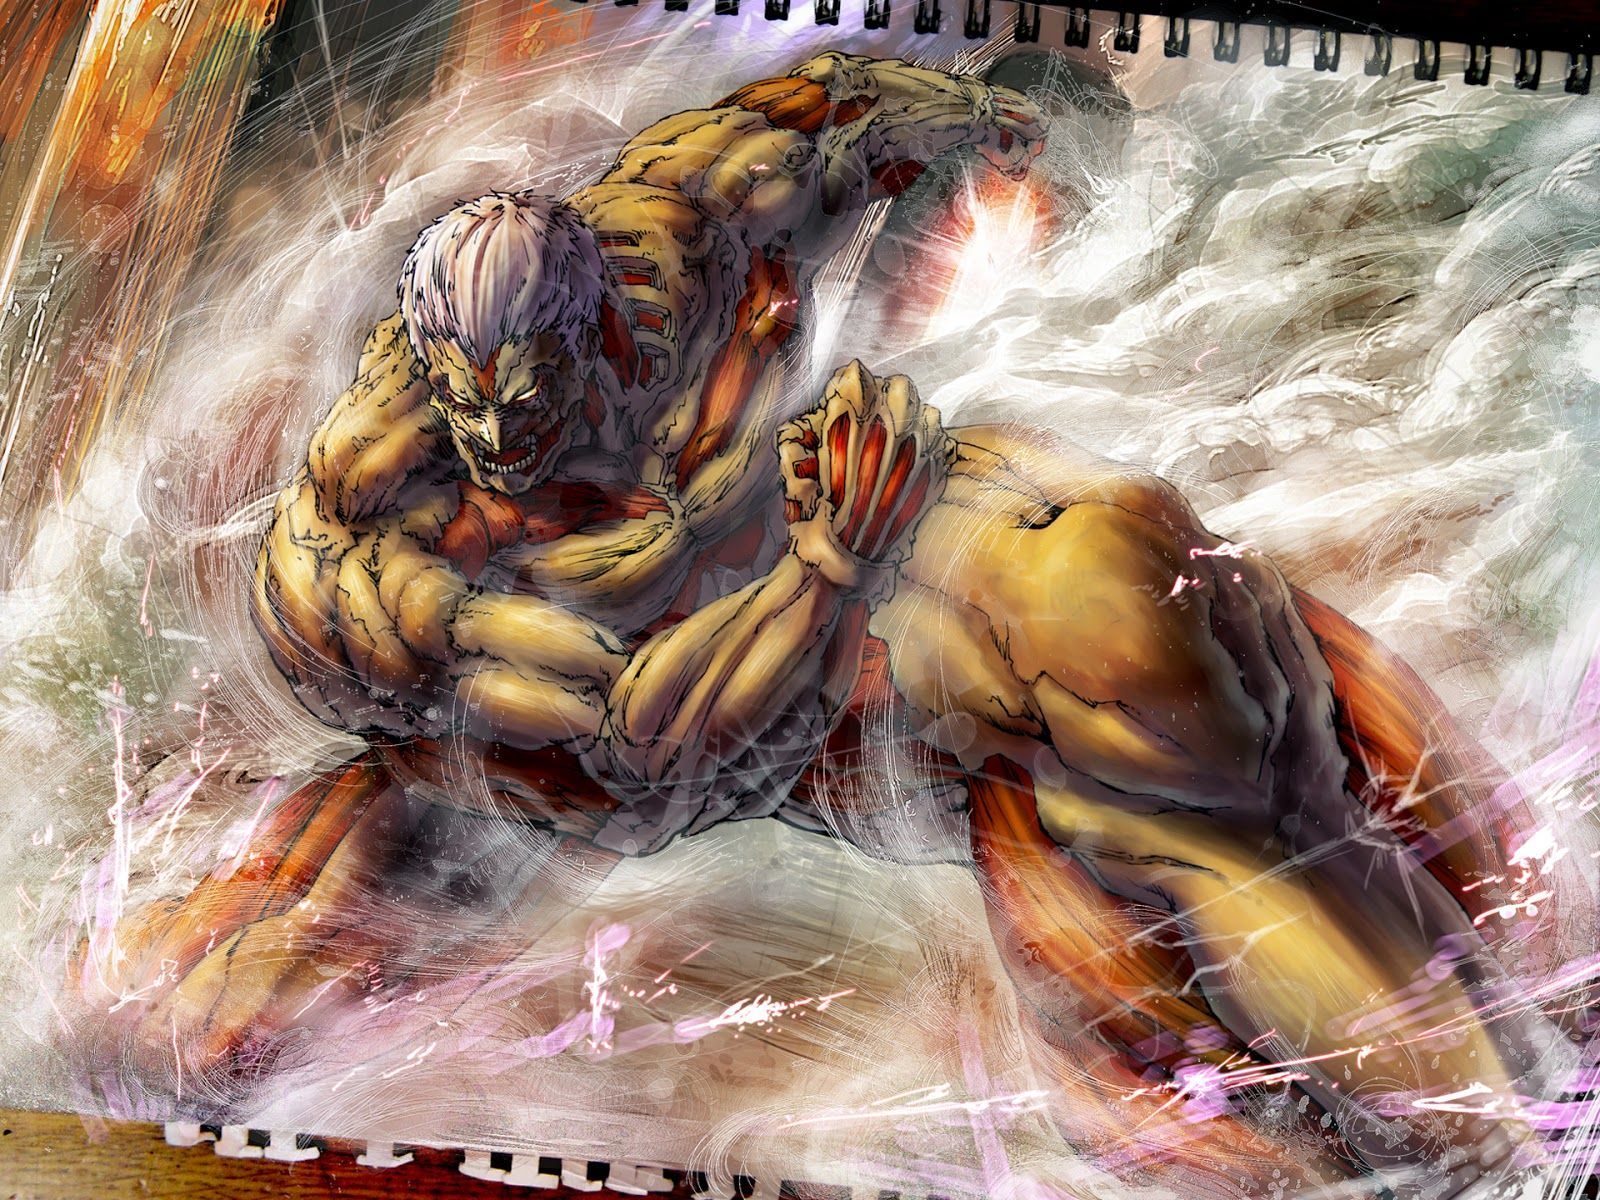 Attack On Titan  Levi Ackerman Vs Beast Titan 4K wallpaper download